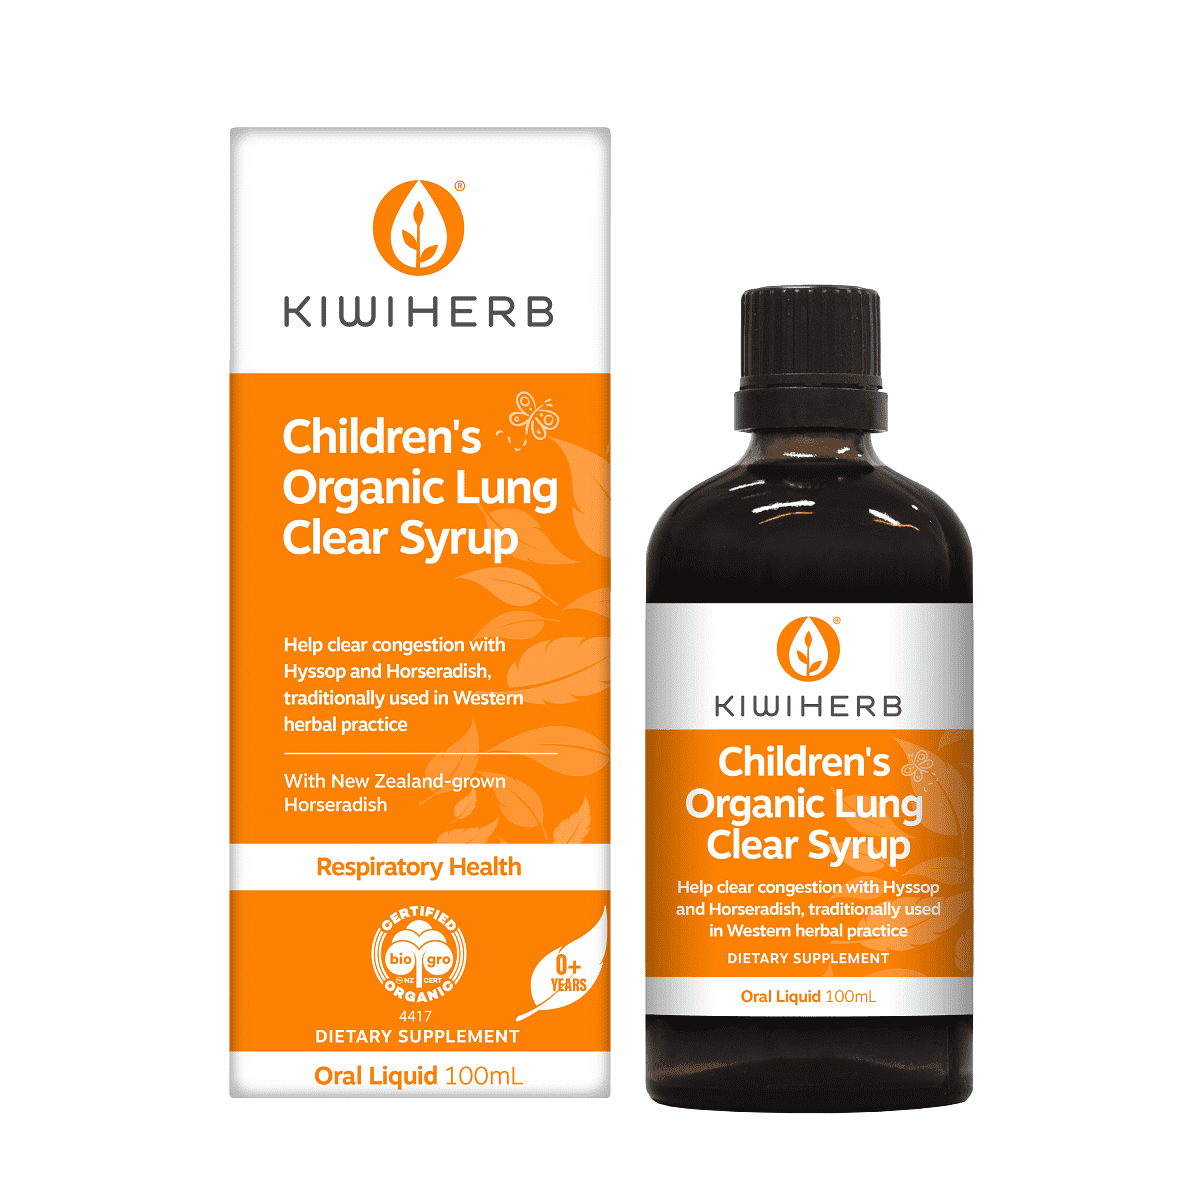 Kiwiherb Children's Organic Lung Clear Syrup.